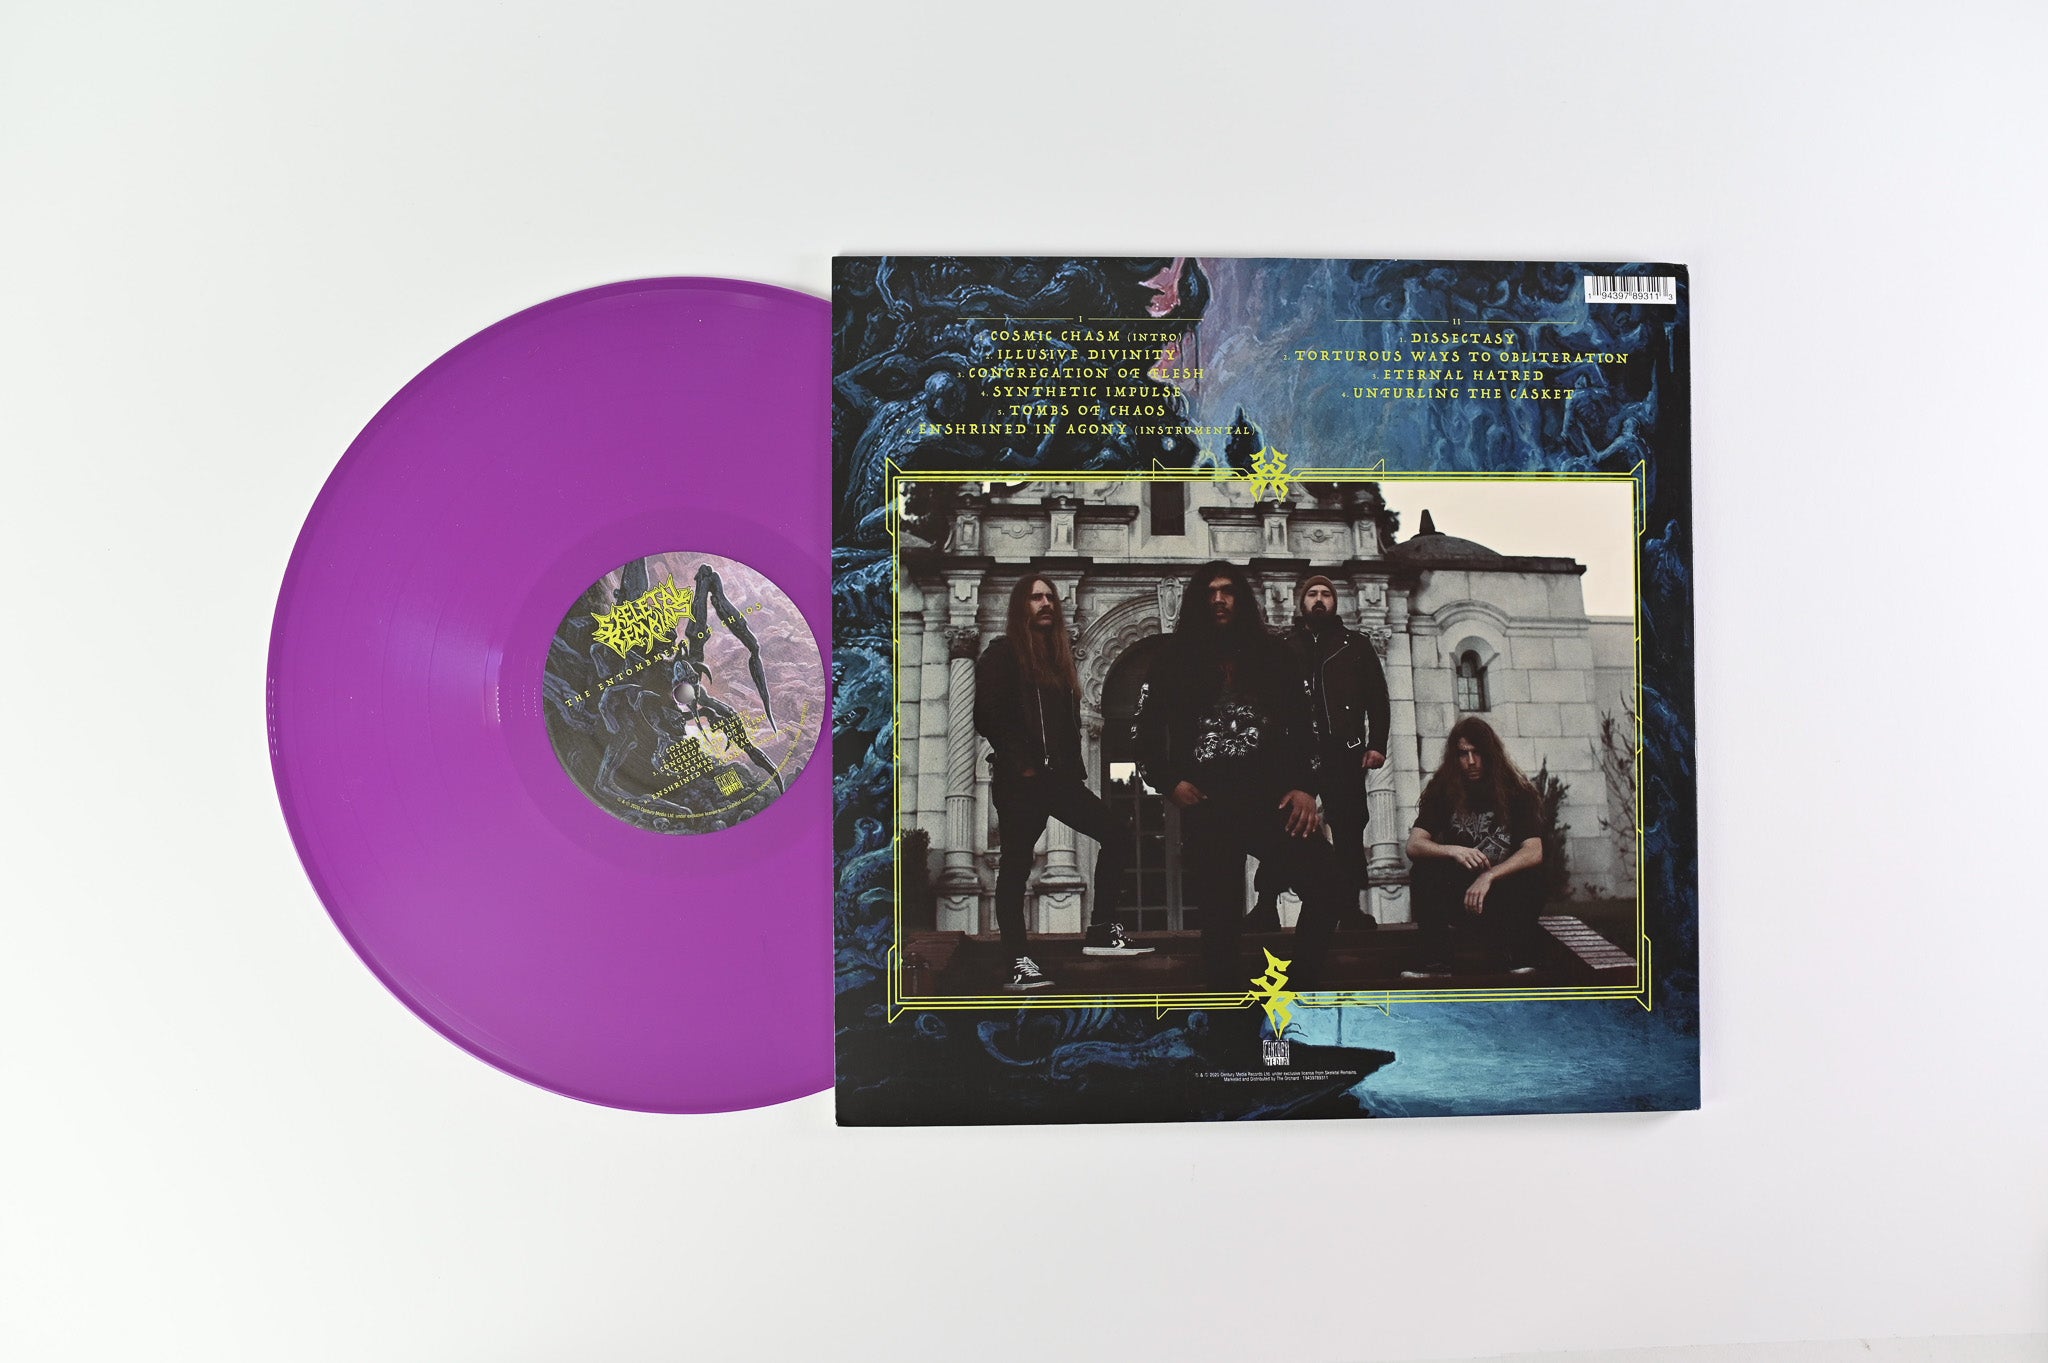 Skeletal Remains - The Entombment Of Chaos on Century Media - Purple Vinyl